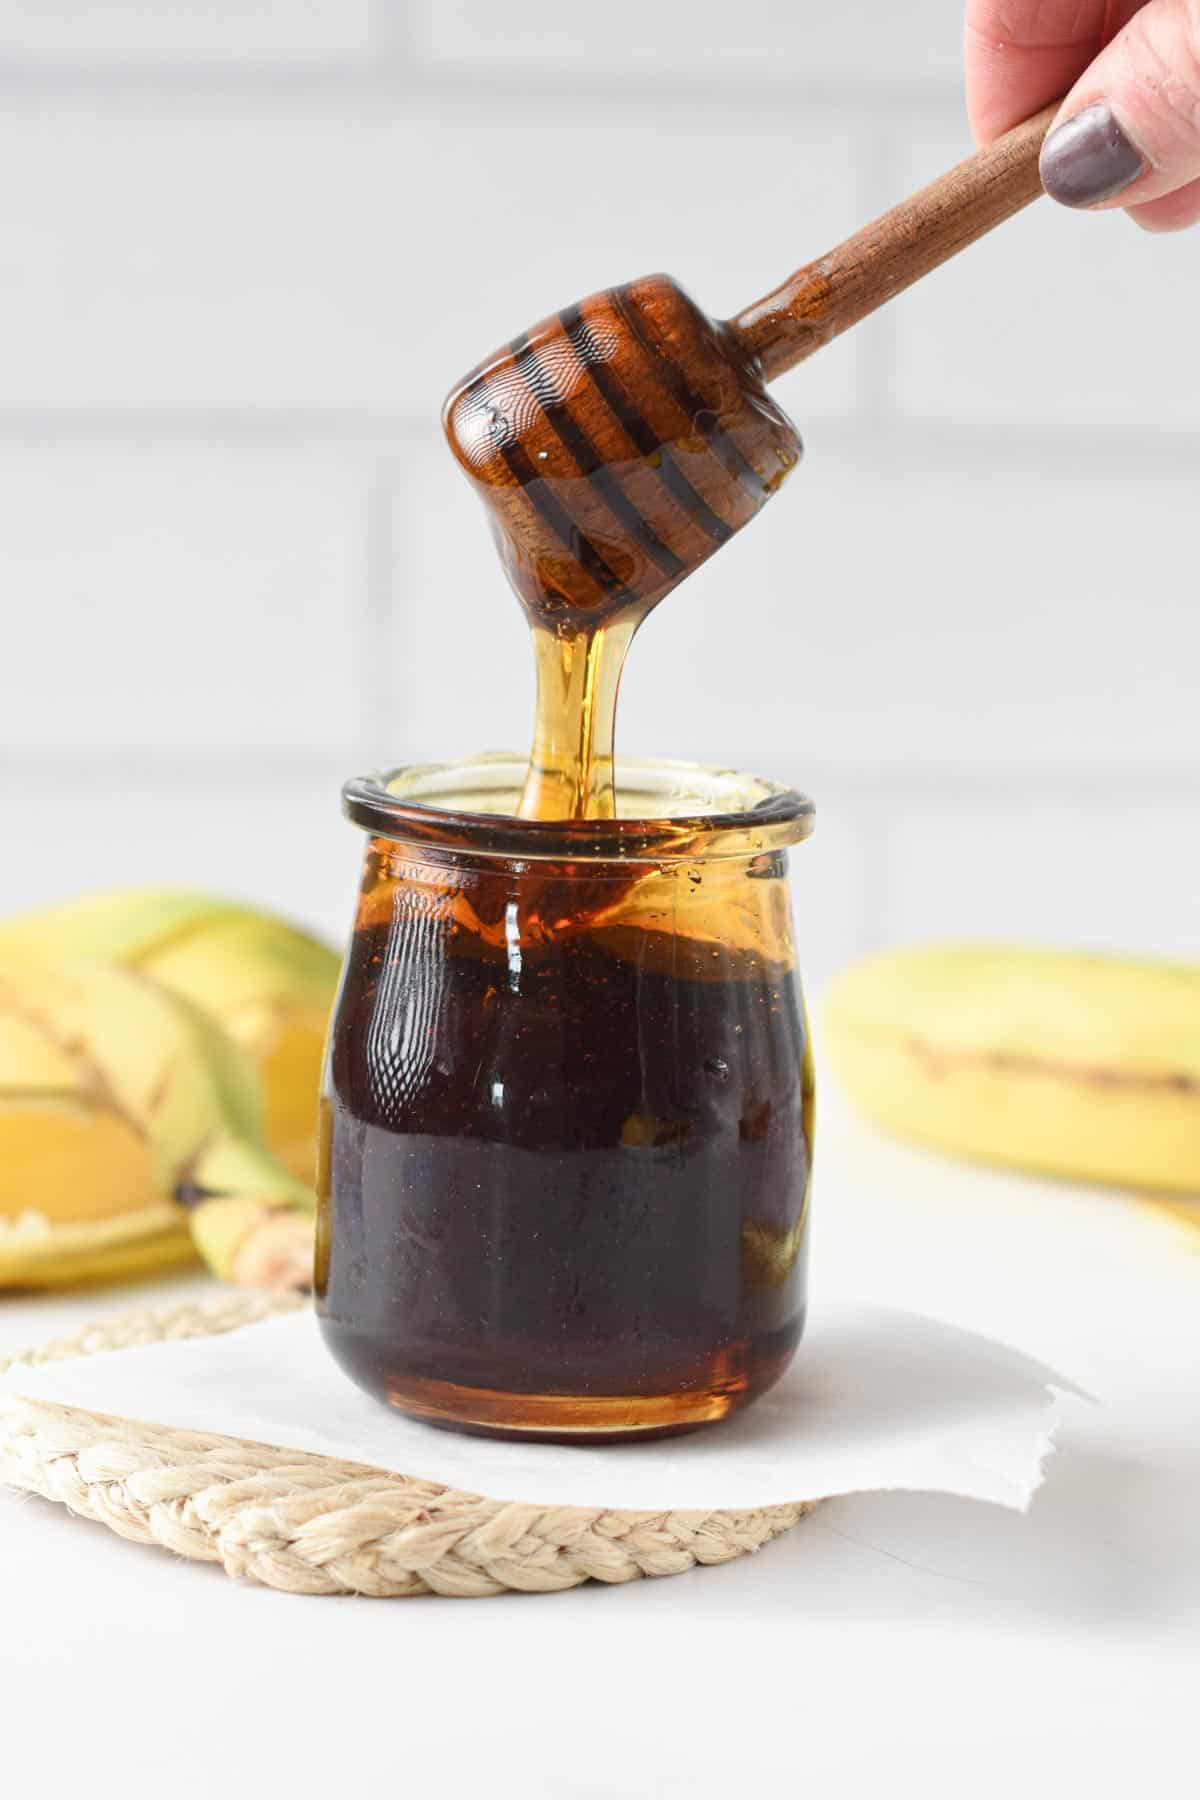 Banana Syrup